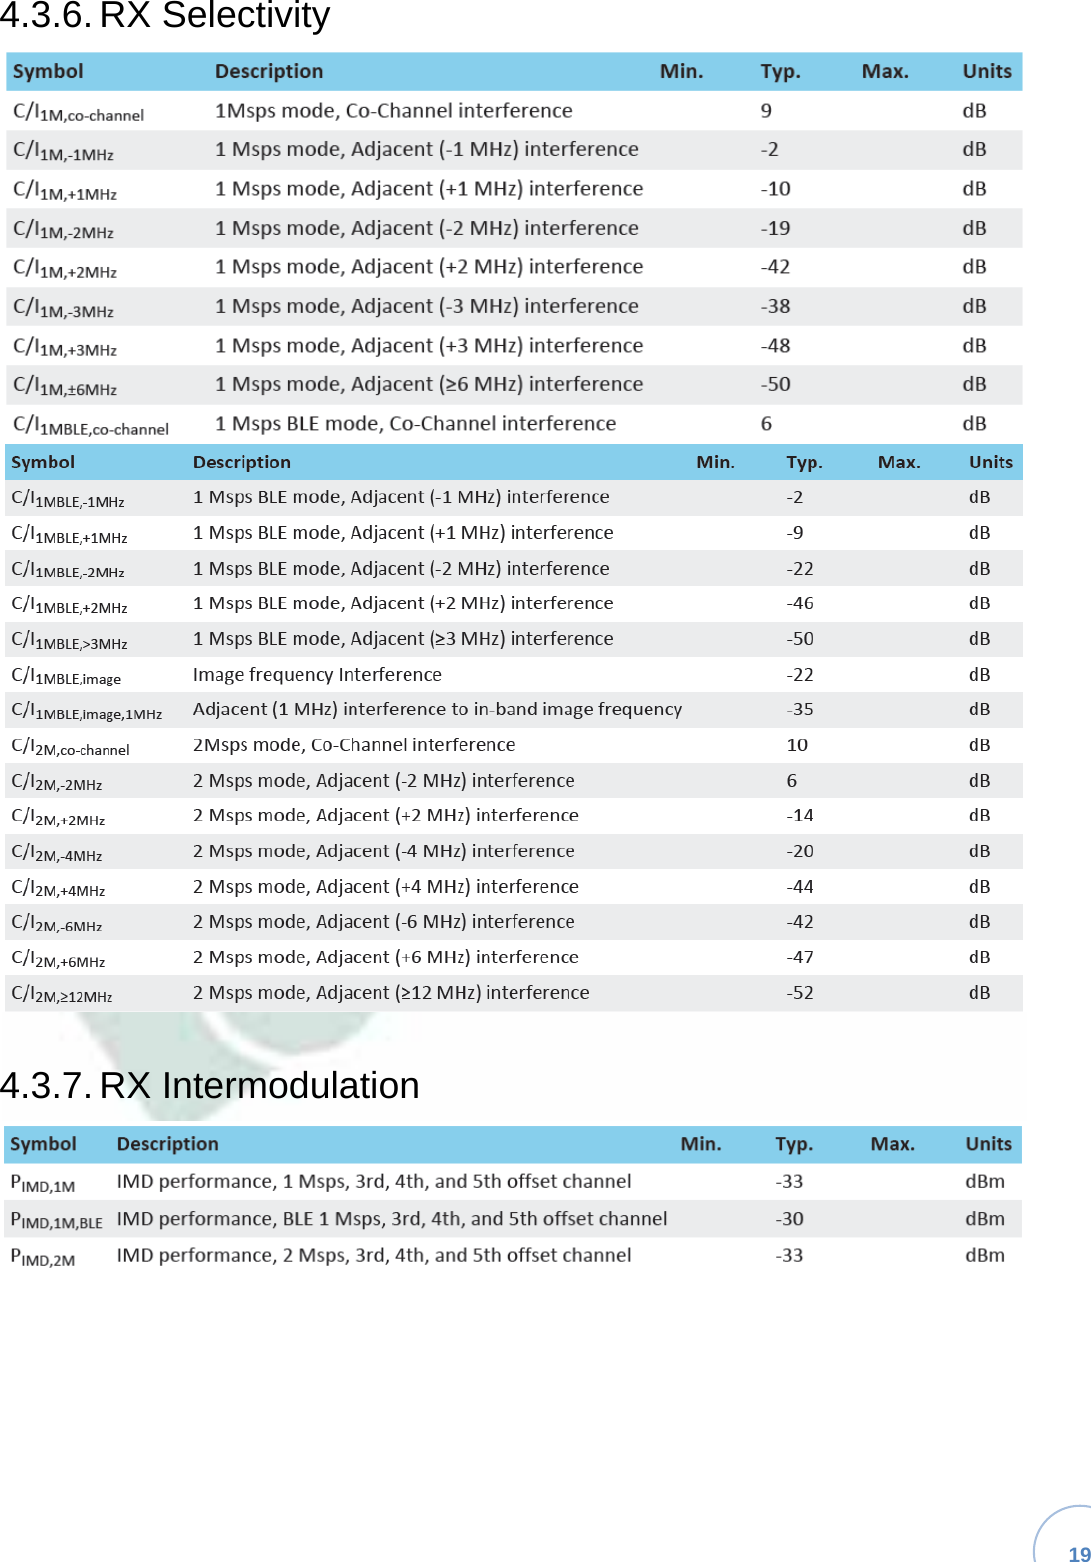   19 4.3.6. RX Selectivity4.3.7. RX Intermodulation